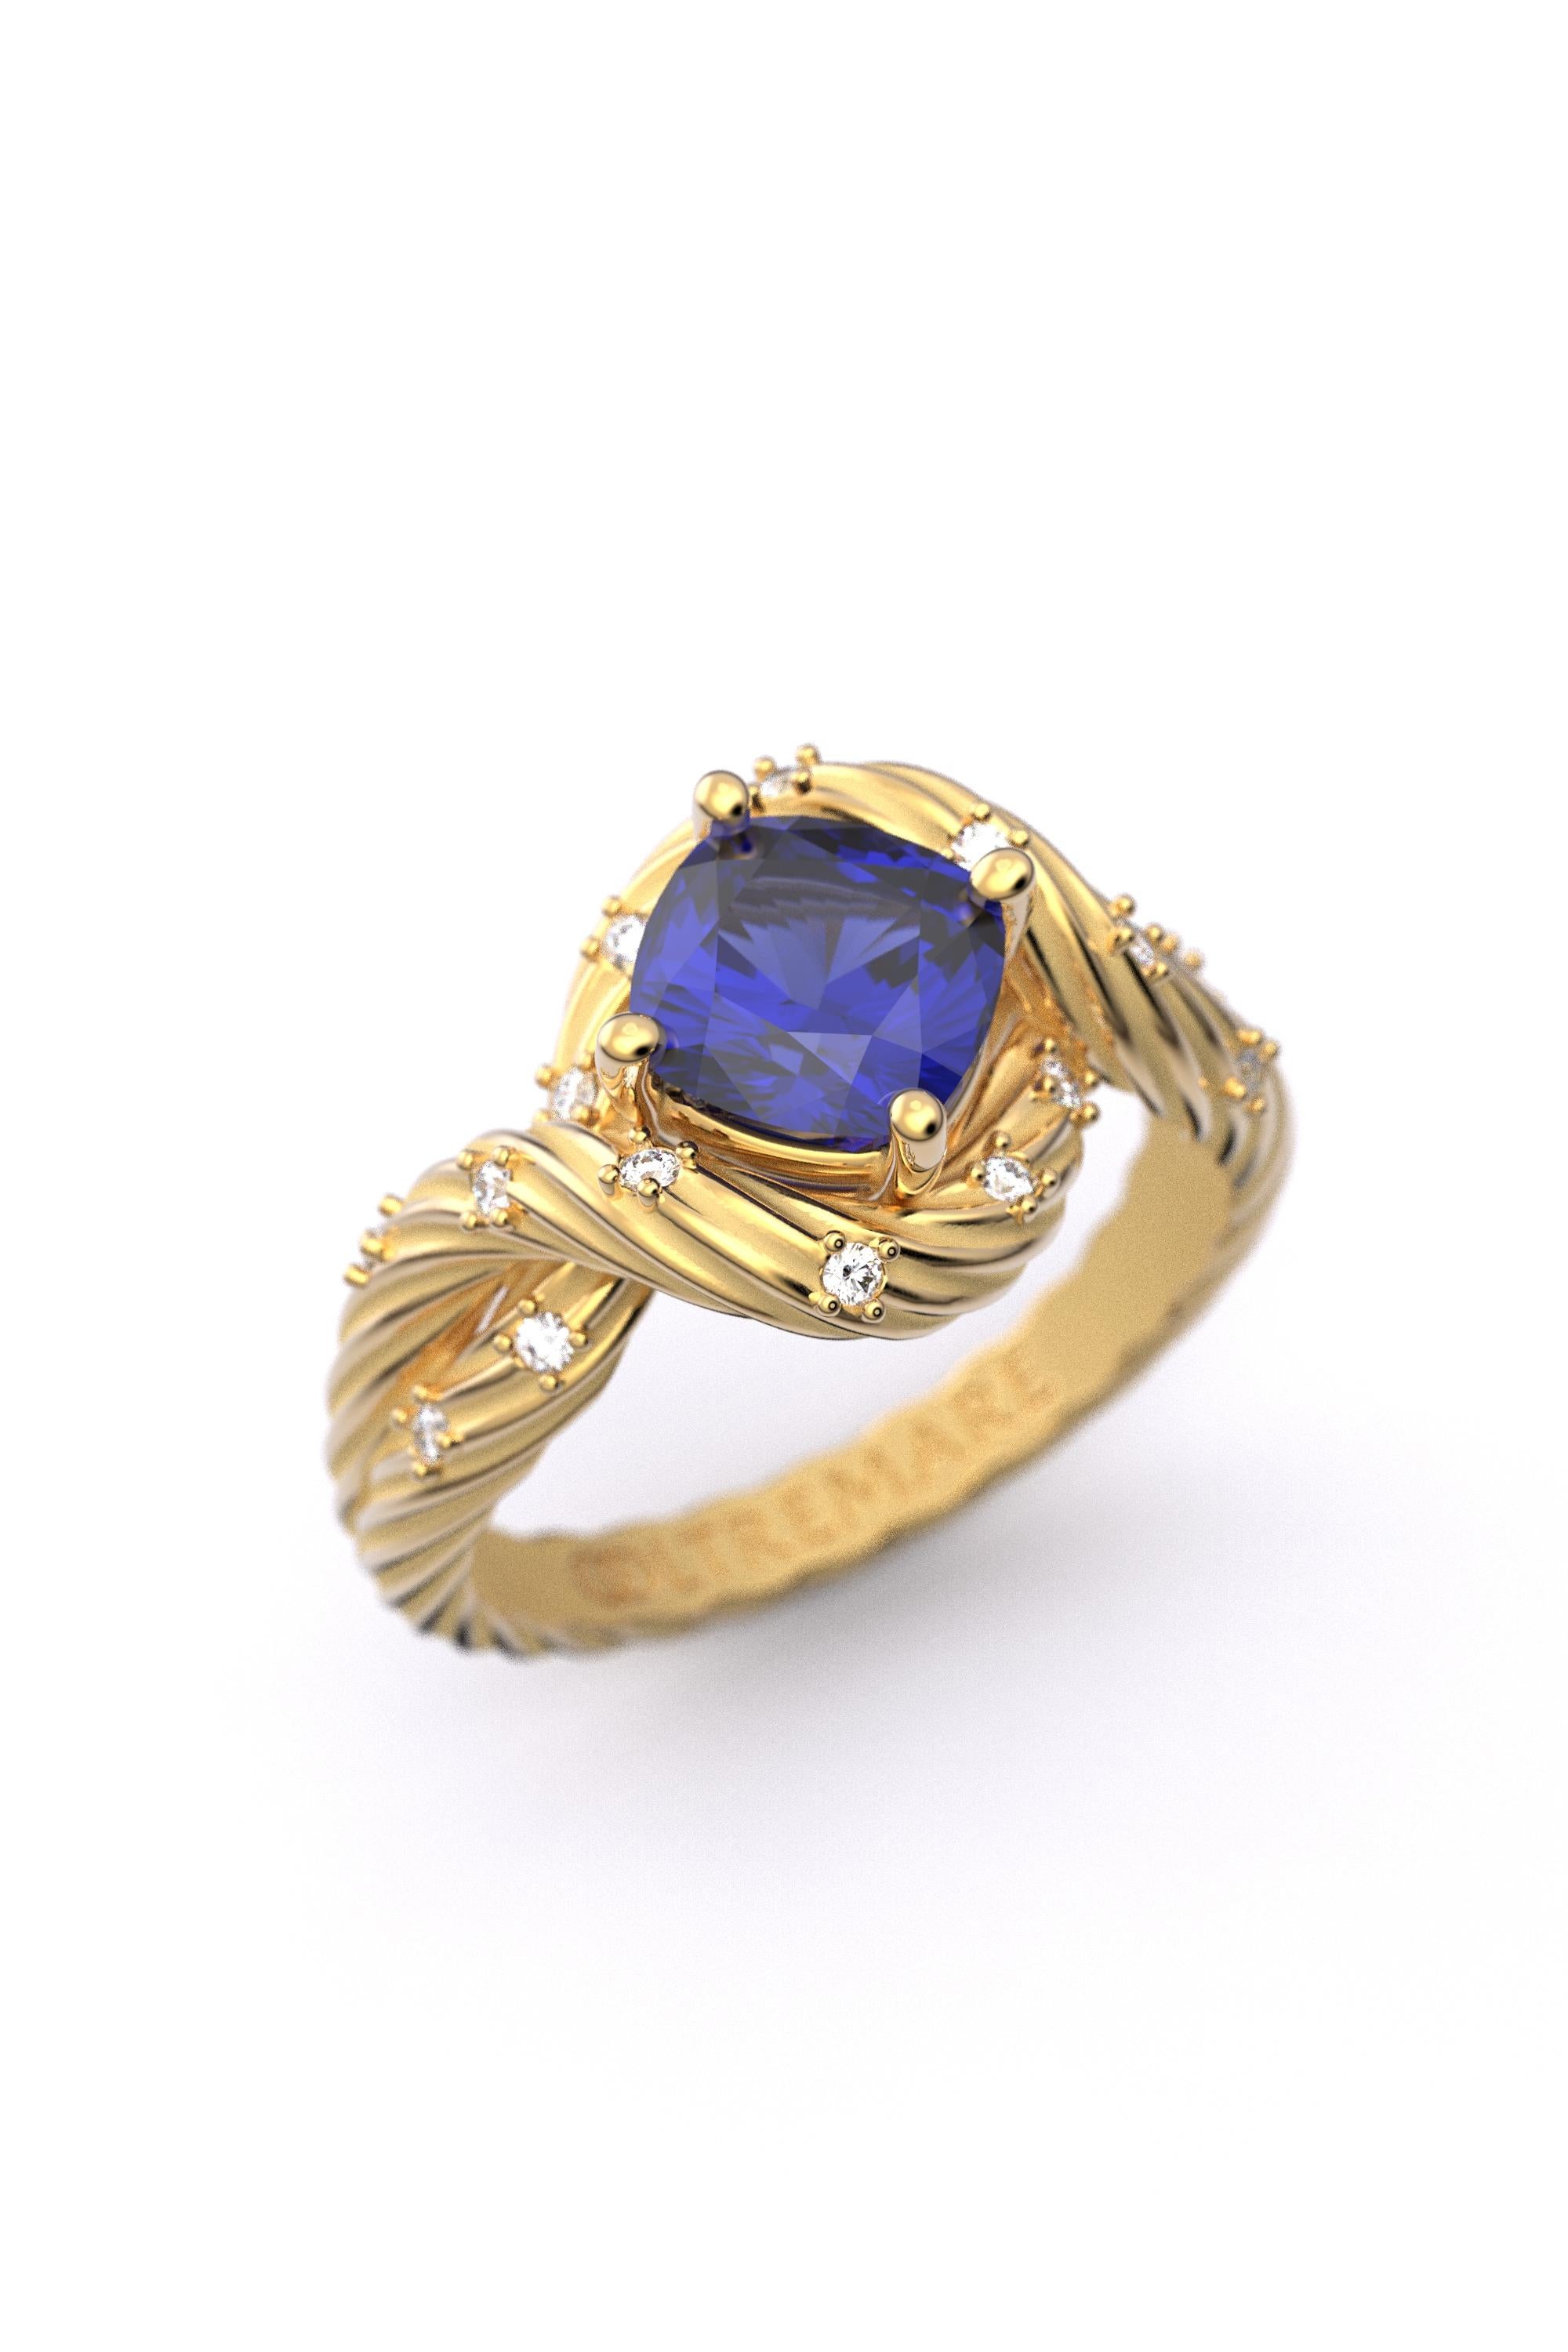 For Sale:  Tanzanite and Diamonds Statement Ring in 18k Solid Gold, Italian Fine Jewelry 2